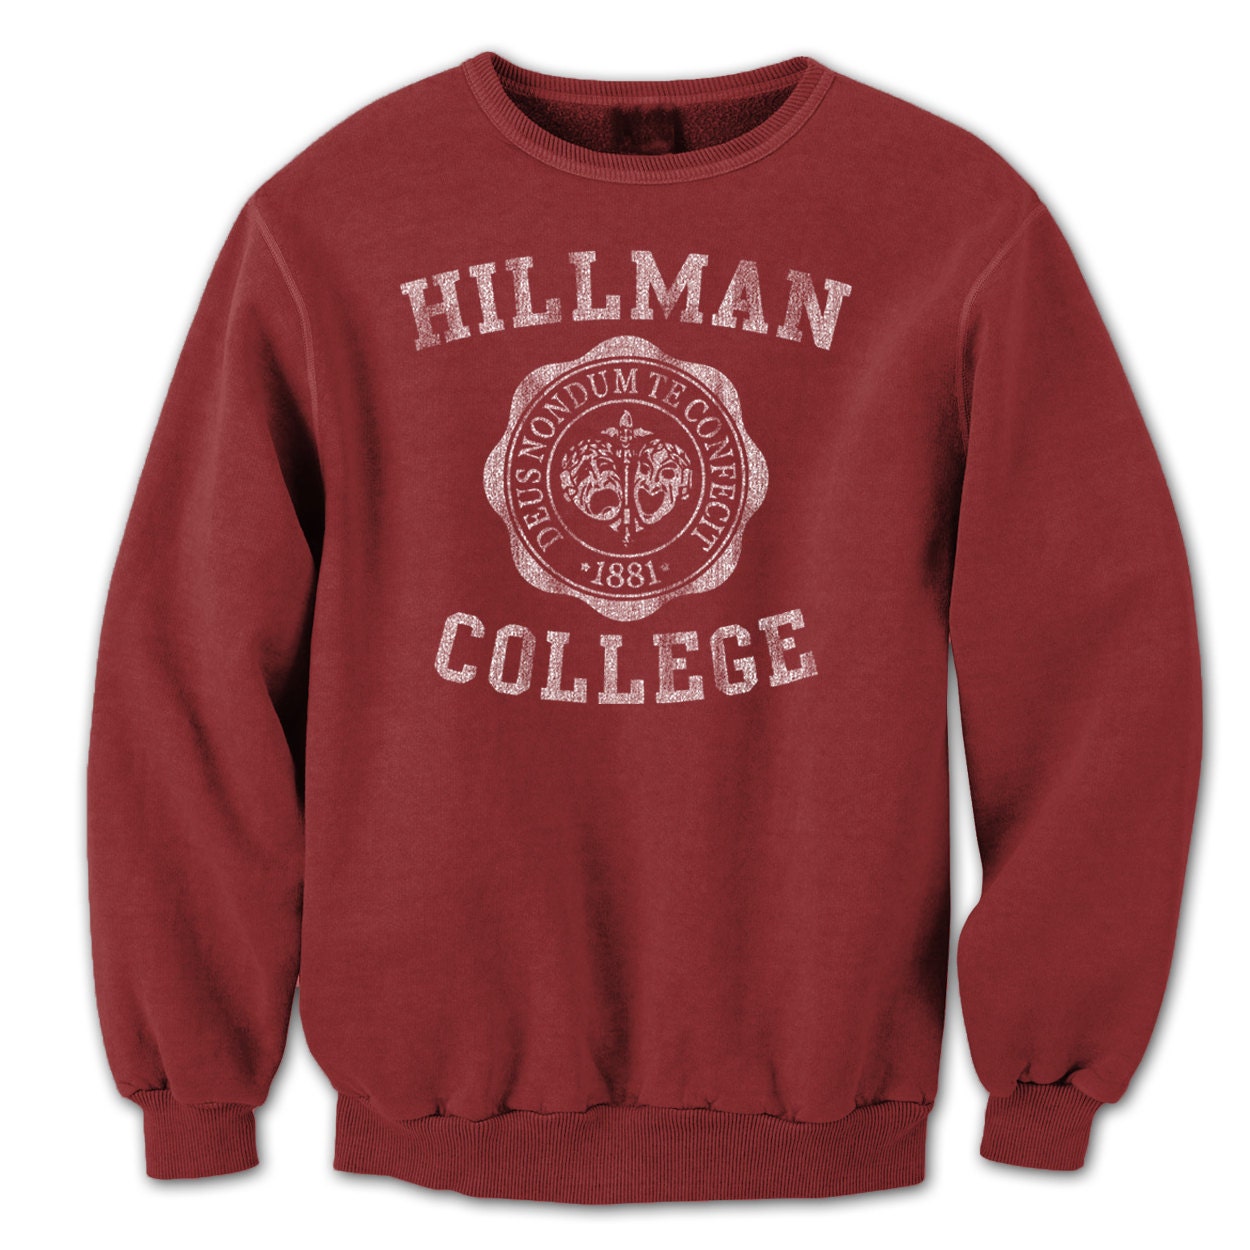 Hillman College Emblem Crewneck Sweatshirt DT0598 by LaughWear